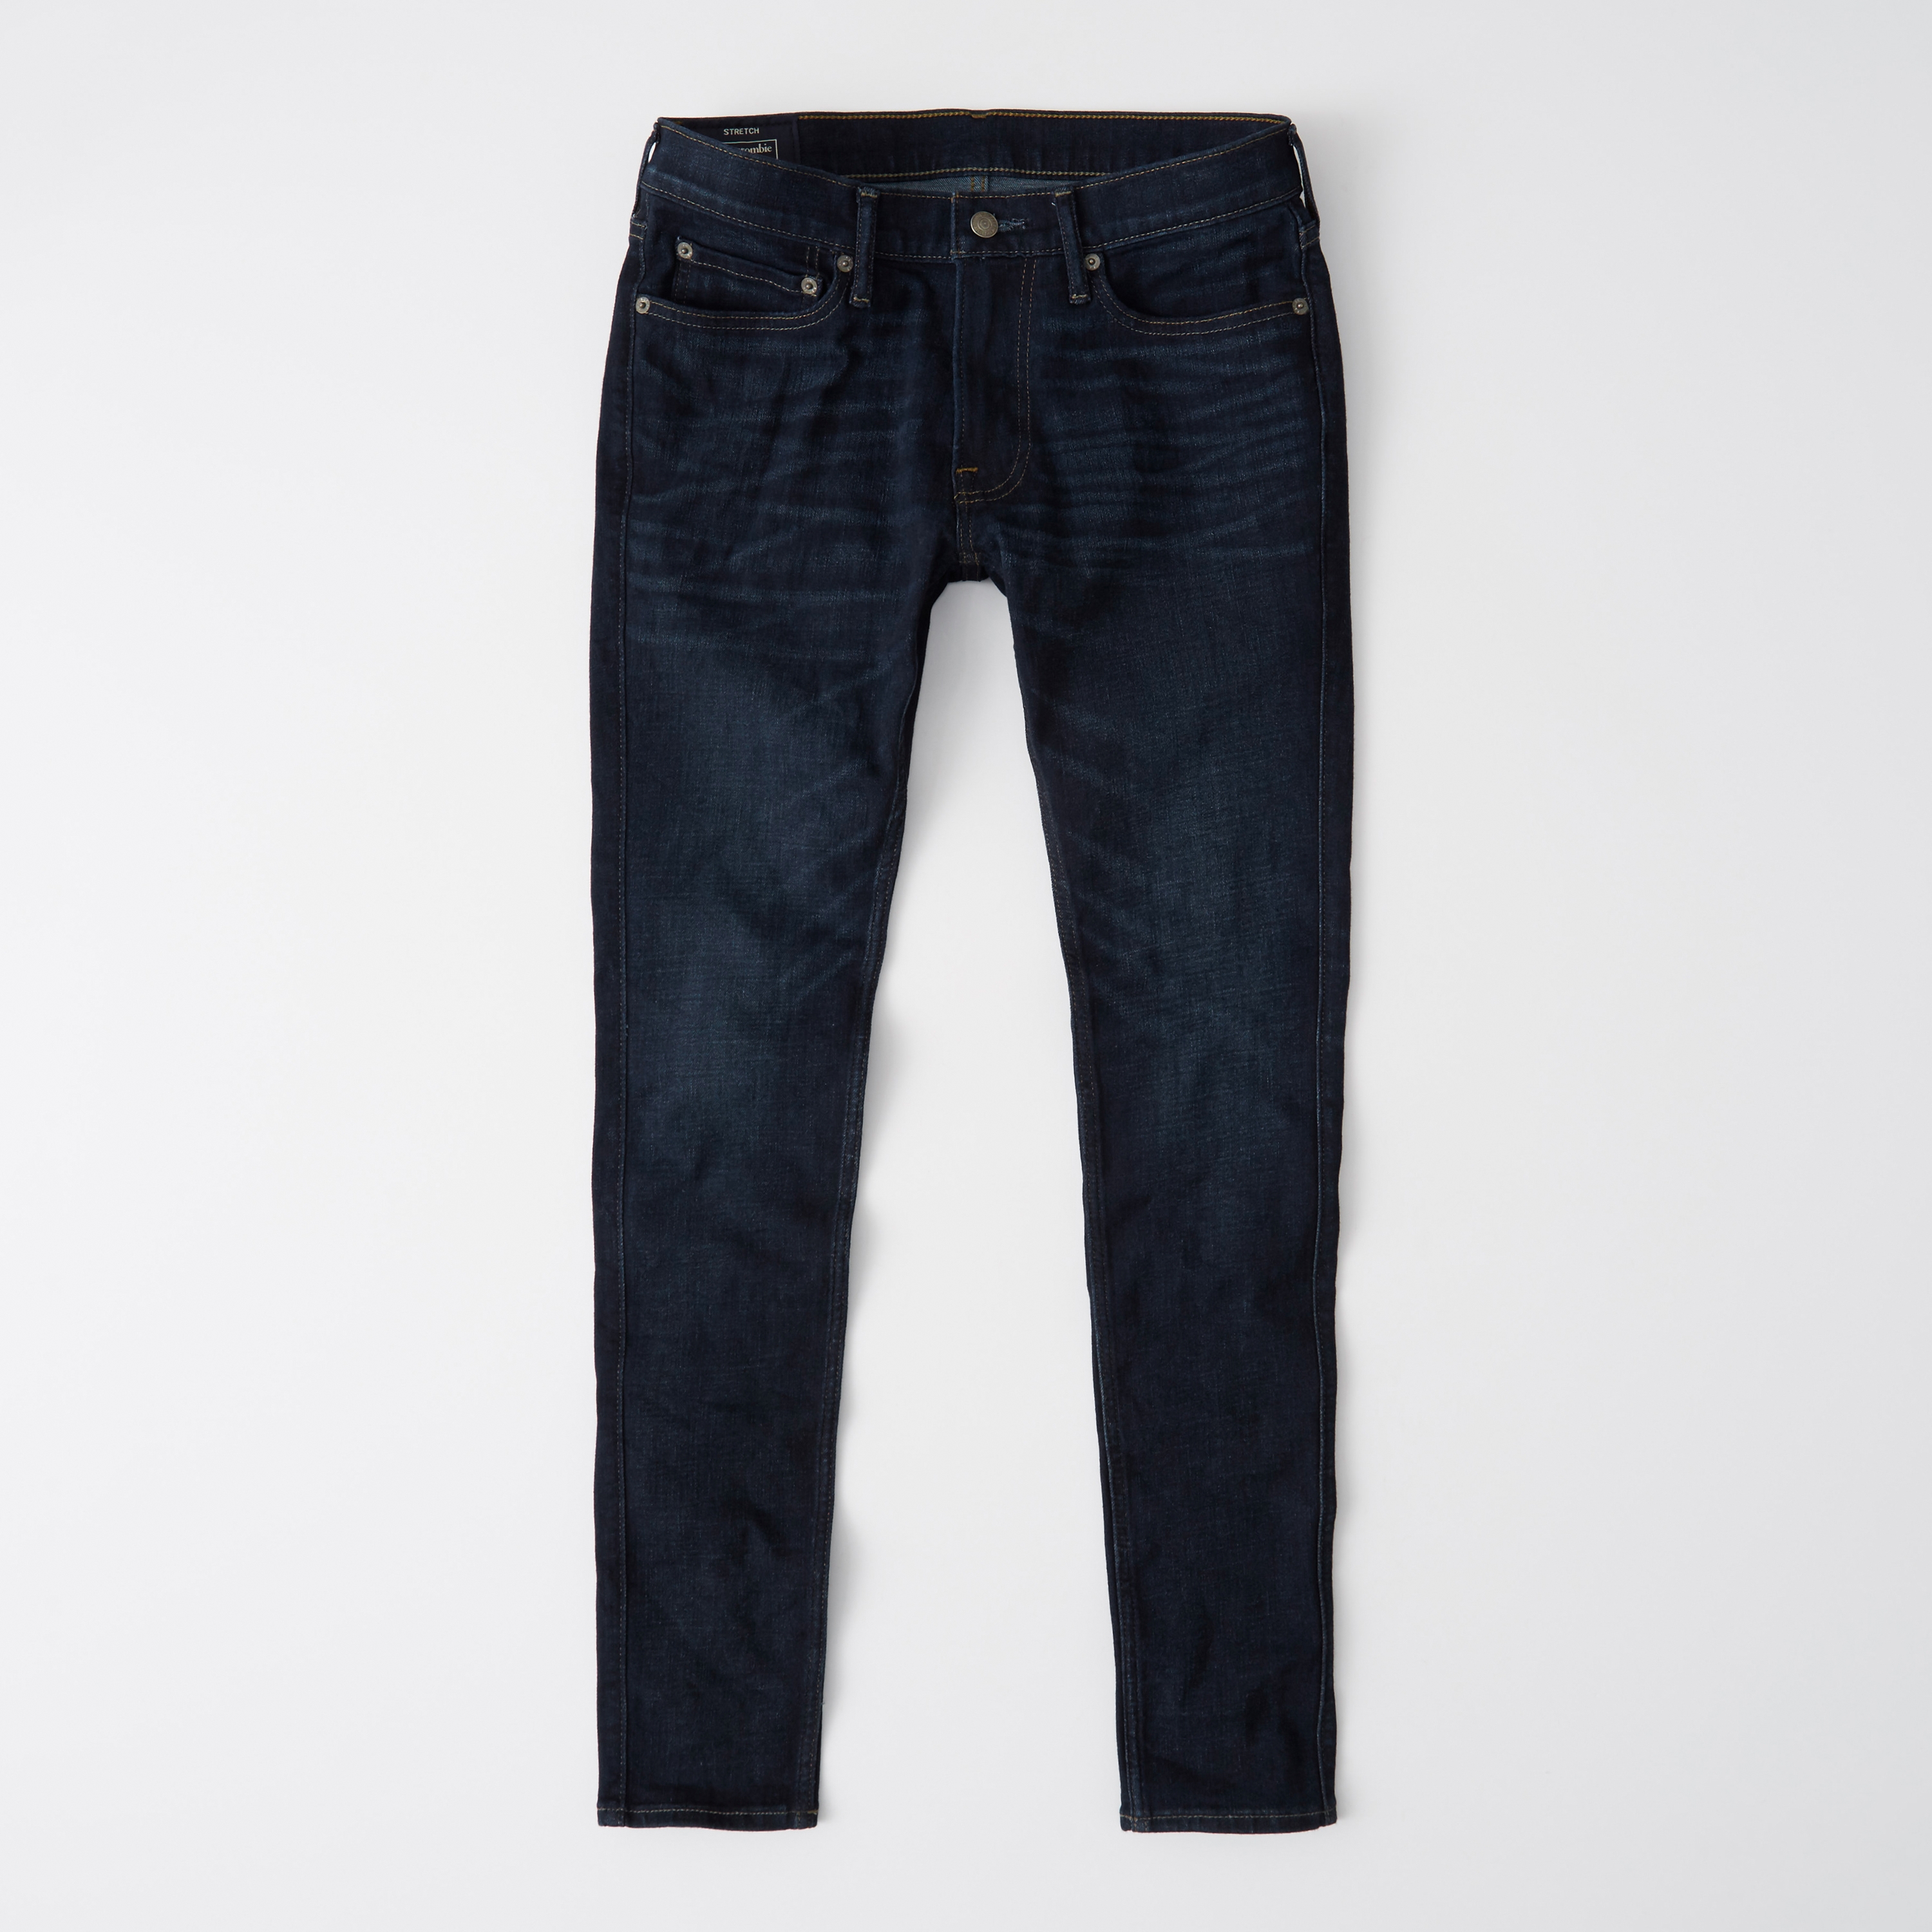 abercrombie extreme skinny jeans